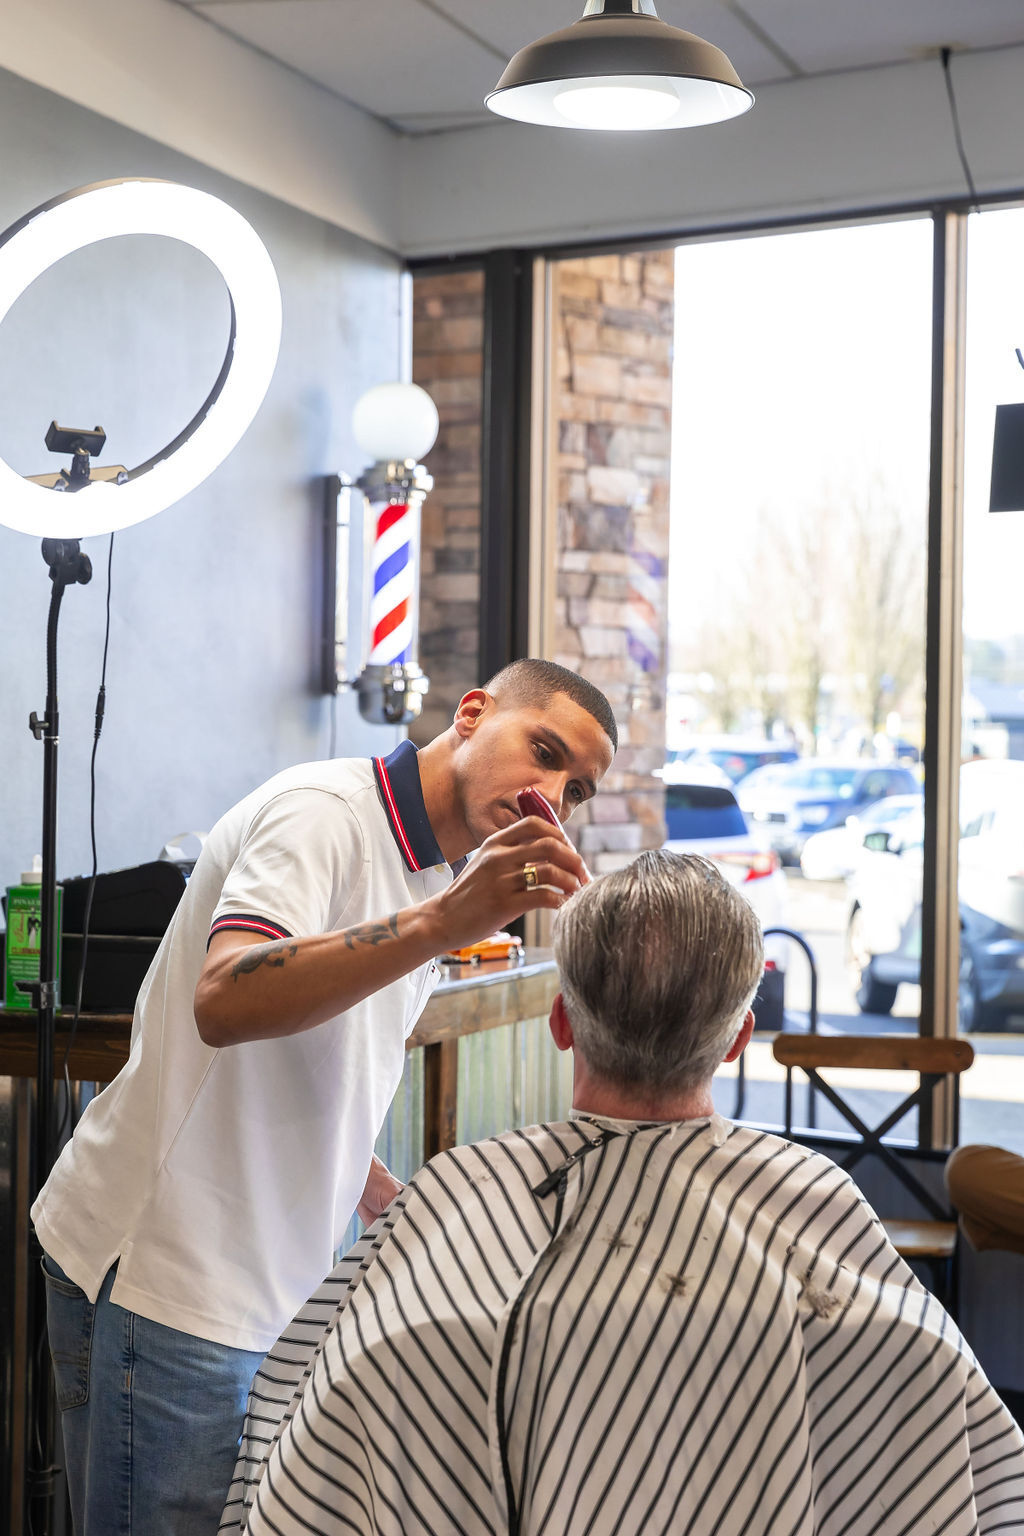 Fade#antique Barbershop #tigard barbershop #portland barbershop #down town tigard#pdx barbershop#style#haircut#clean haircut #barber talk#art